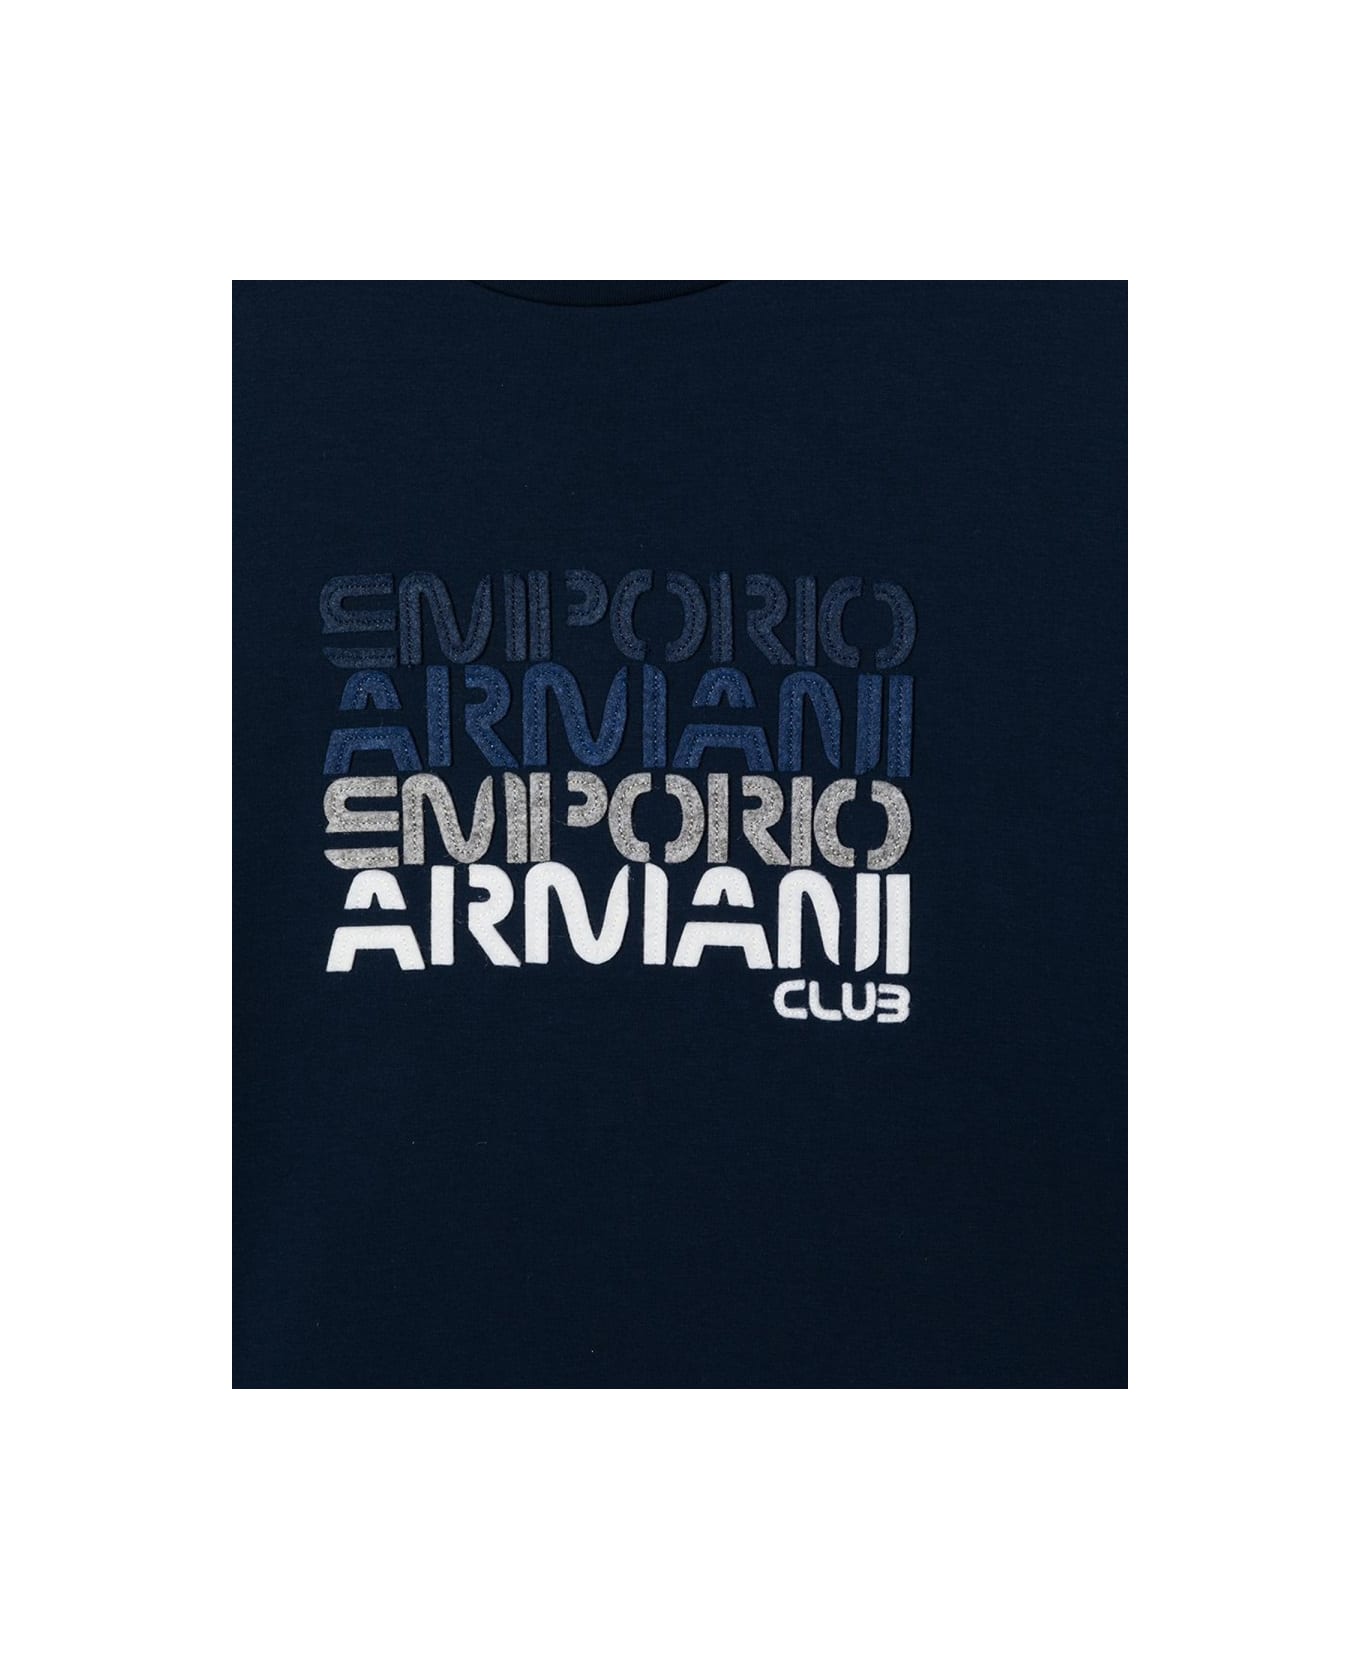 Emporio Armani Sweatshirt - BLUE